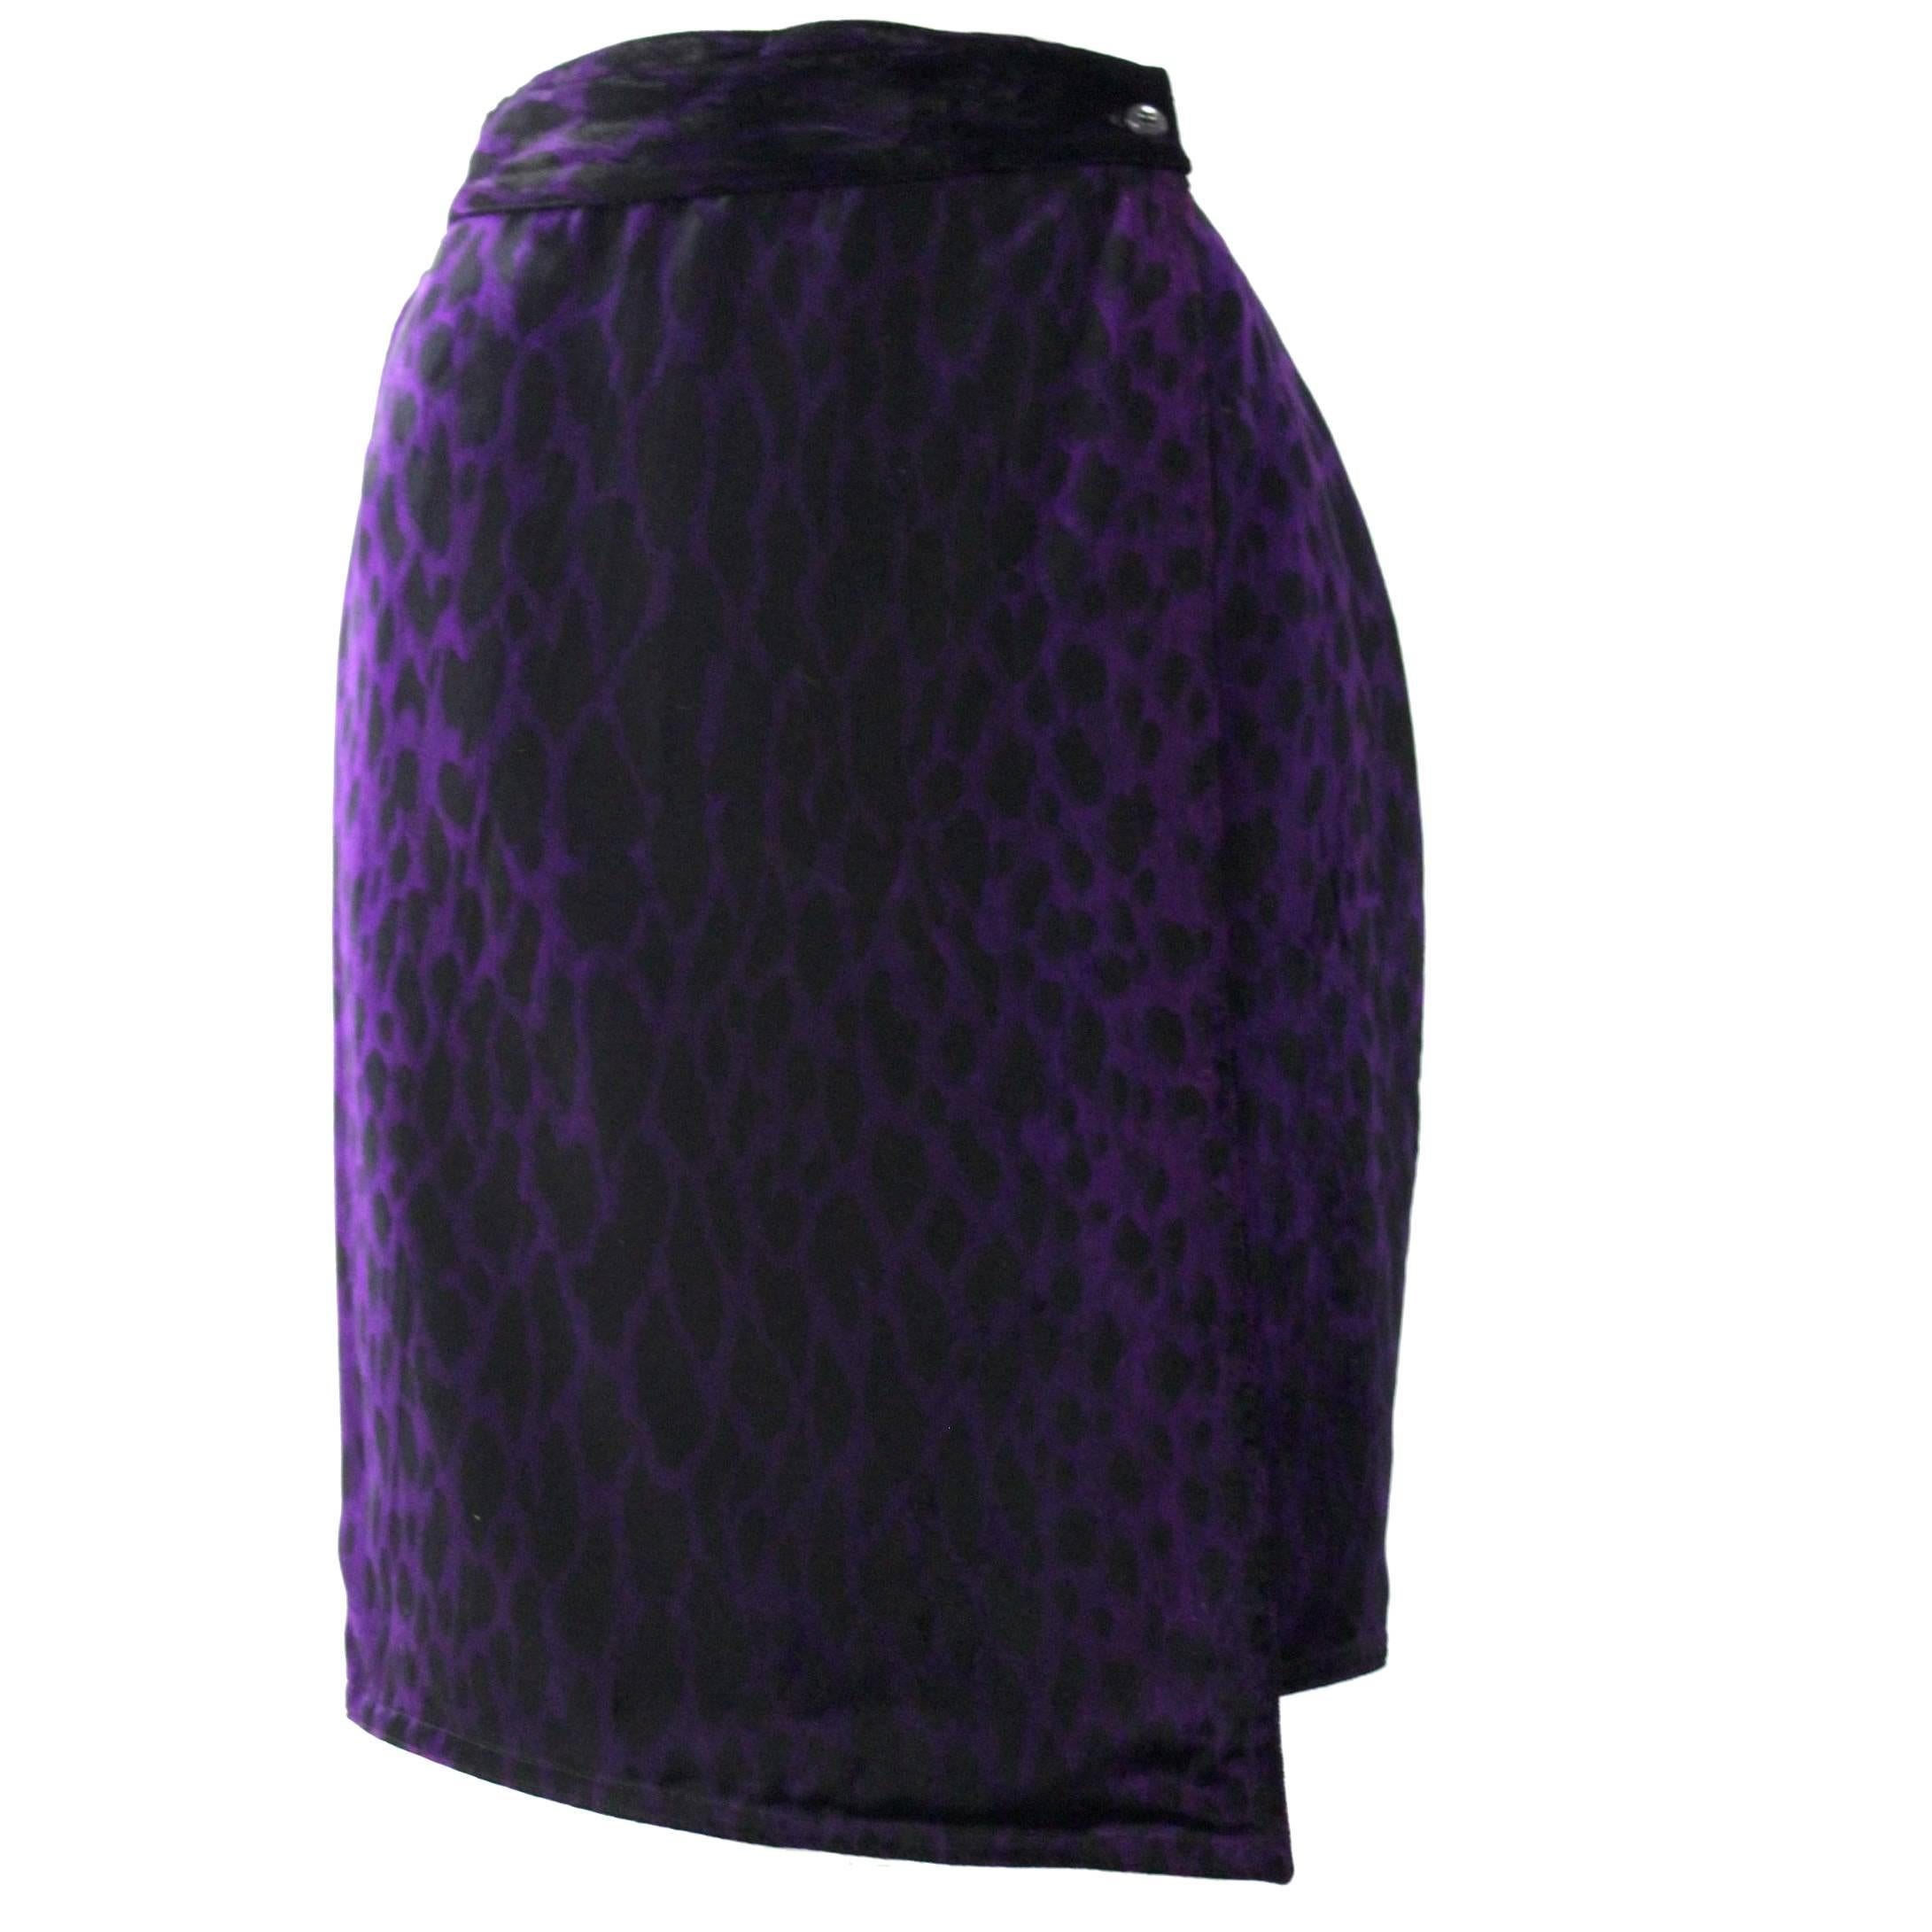 Unique Gianni Versace Couture Velvet Leopard Print Skirt Fall 1989 For Sale